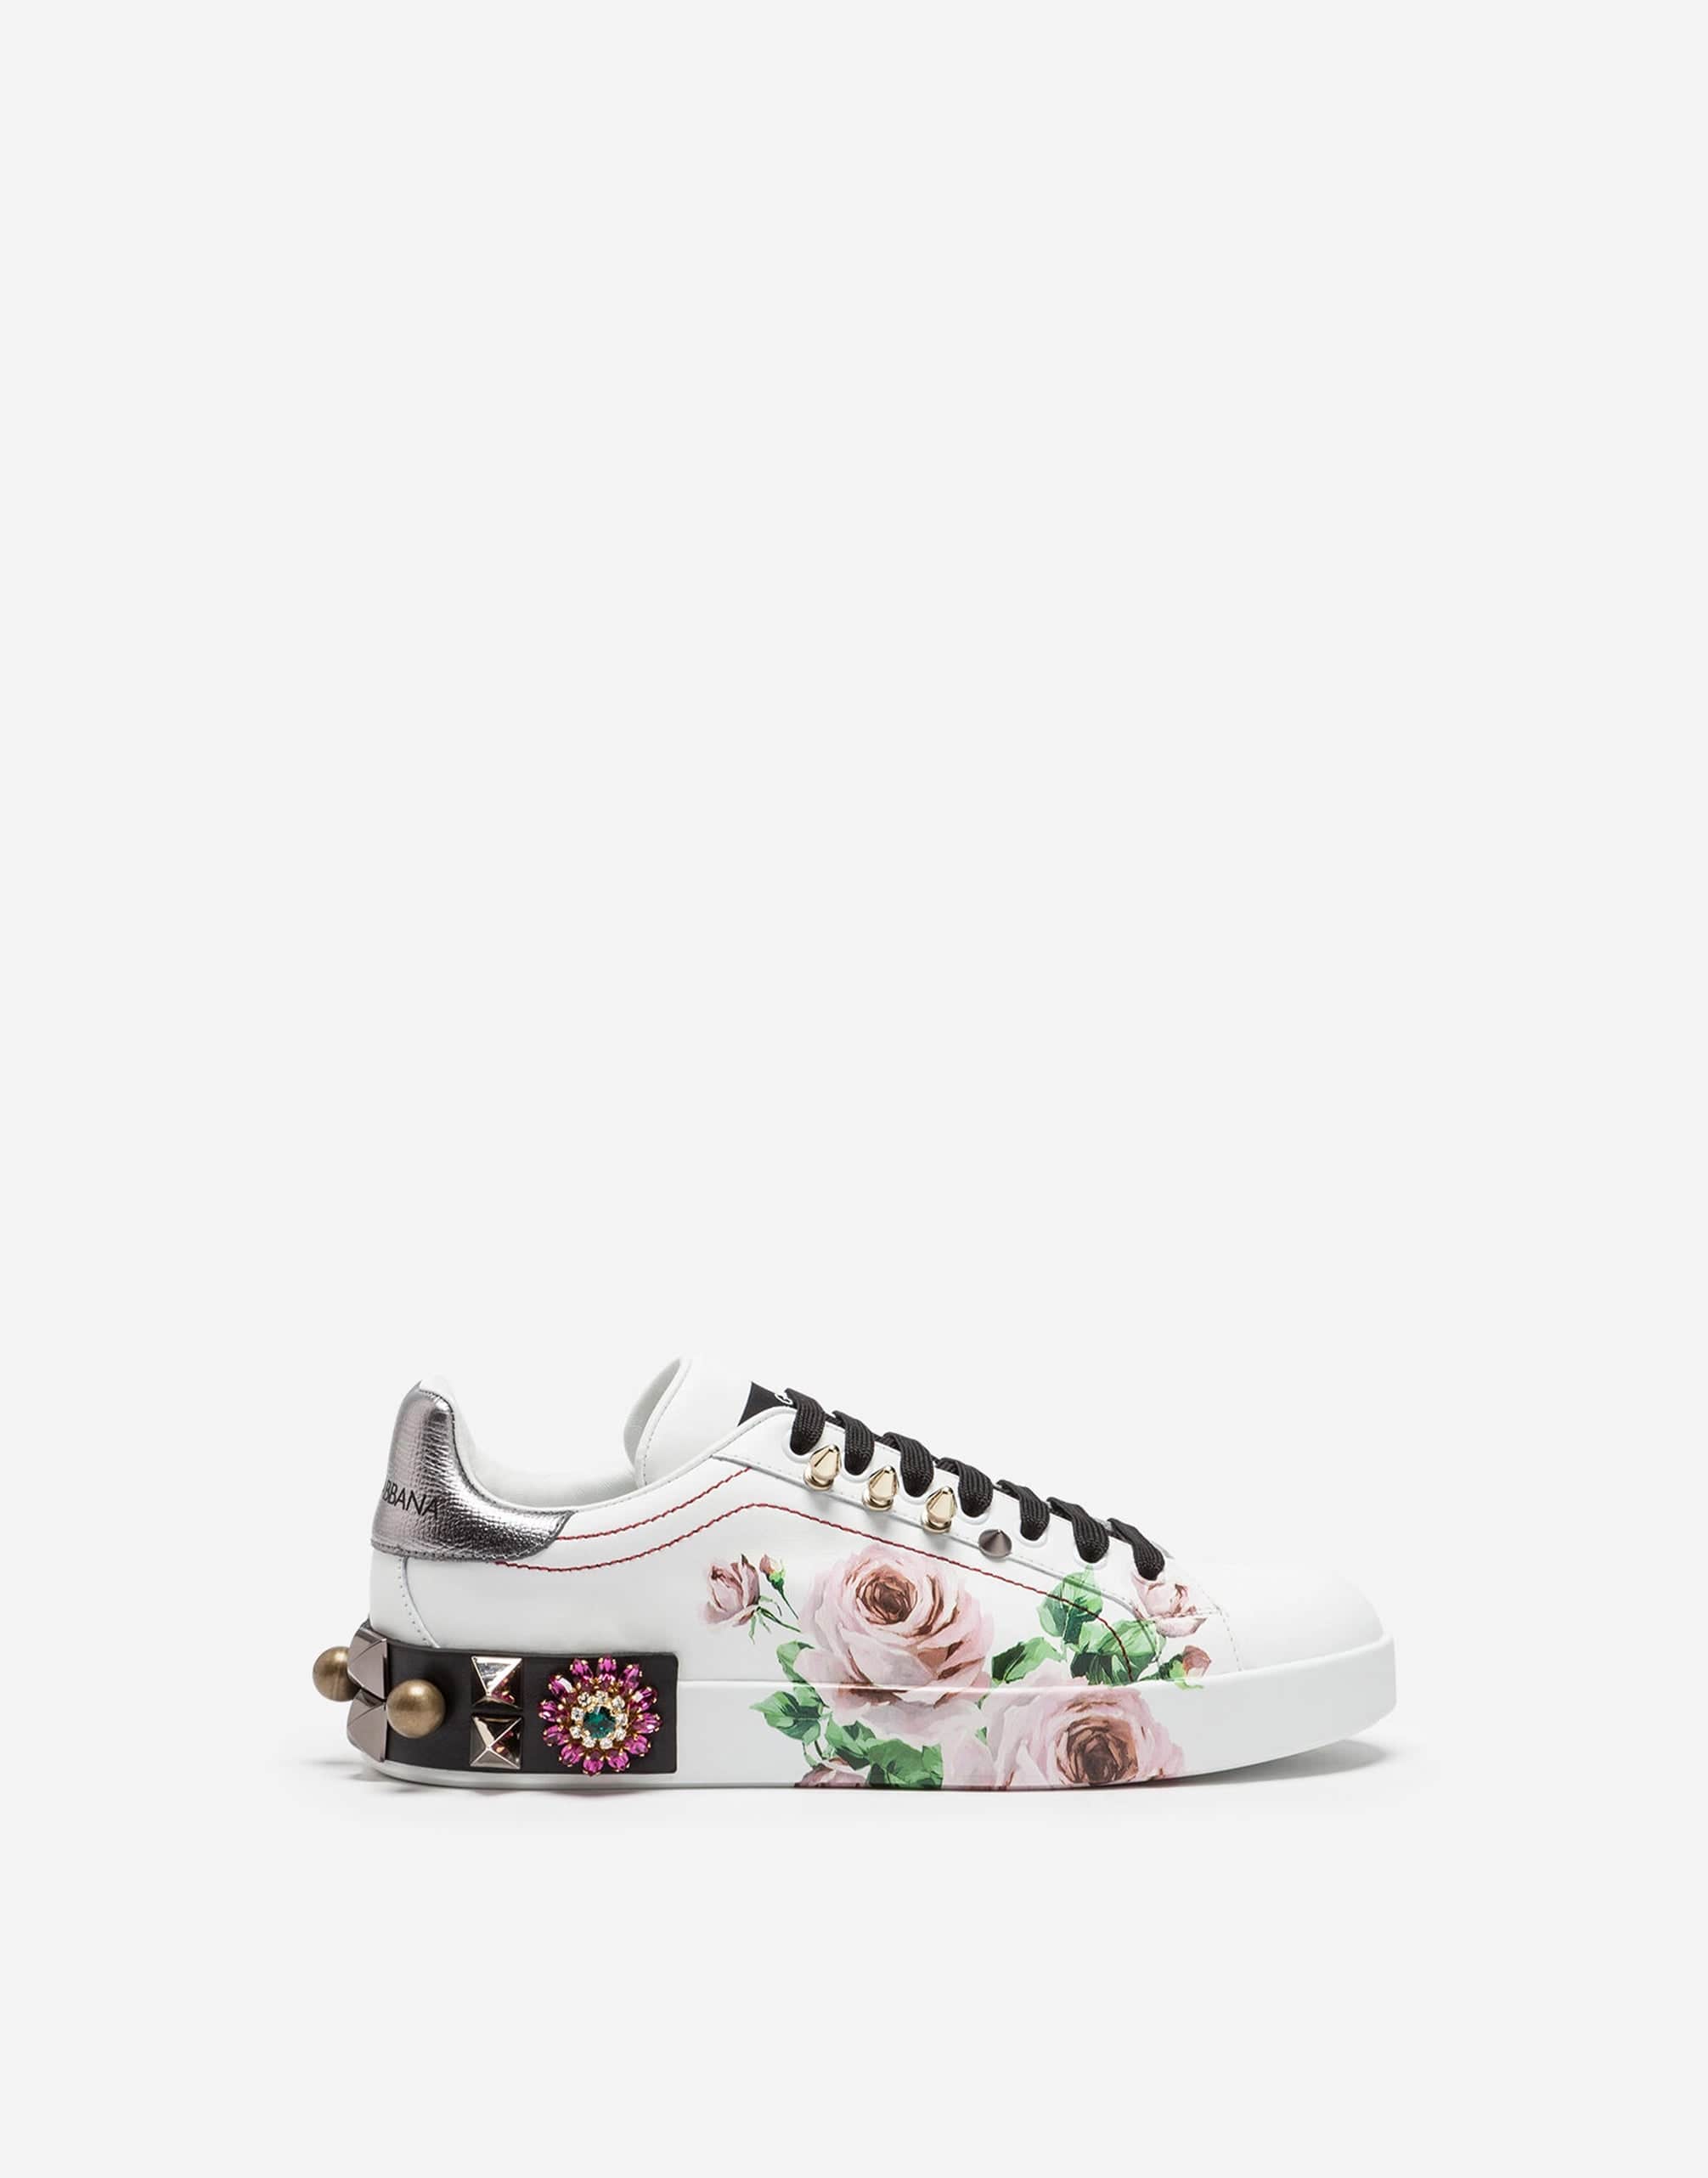 Dolce & Gabbana Portofino Floral-Print Sneakers